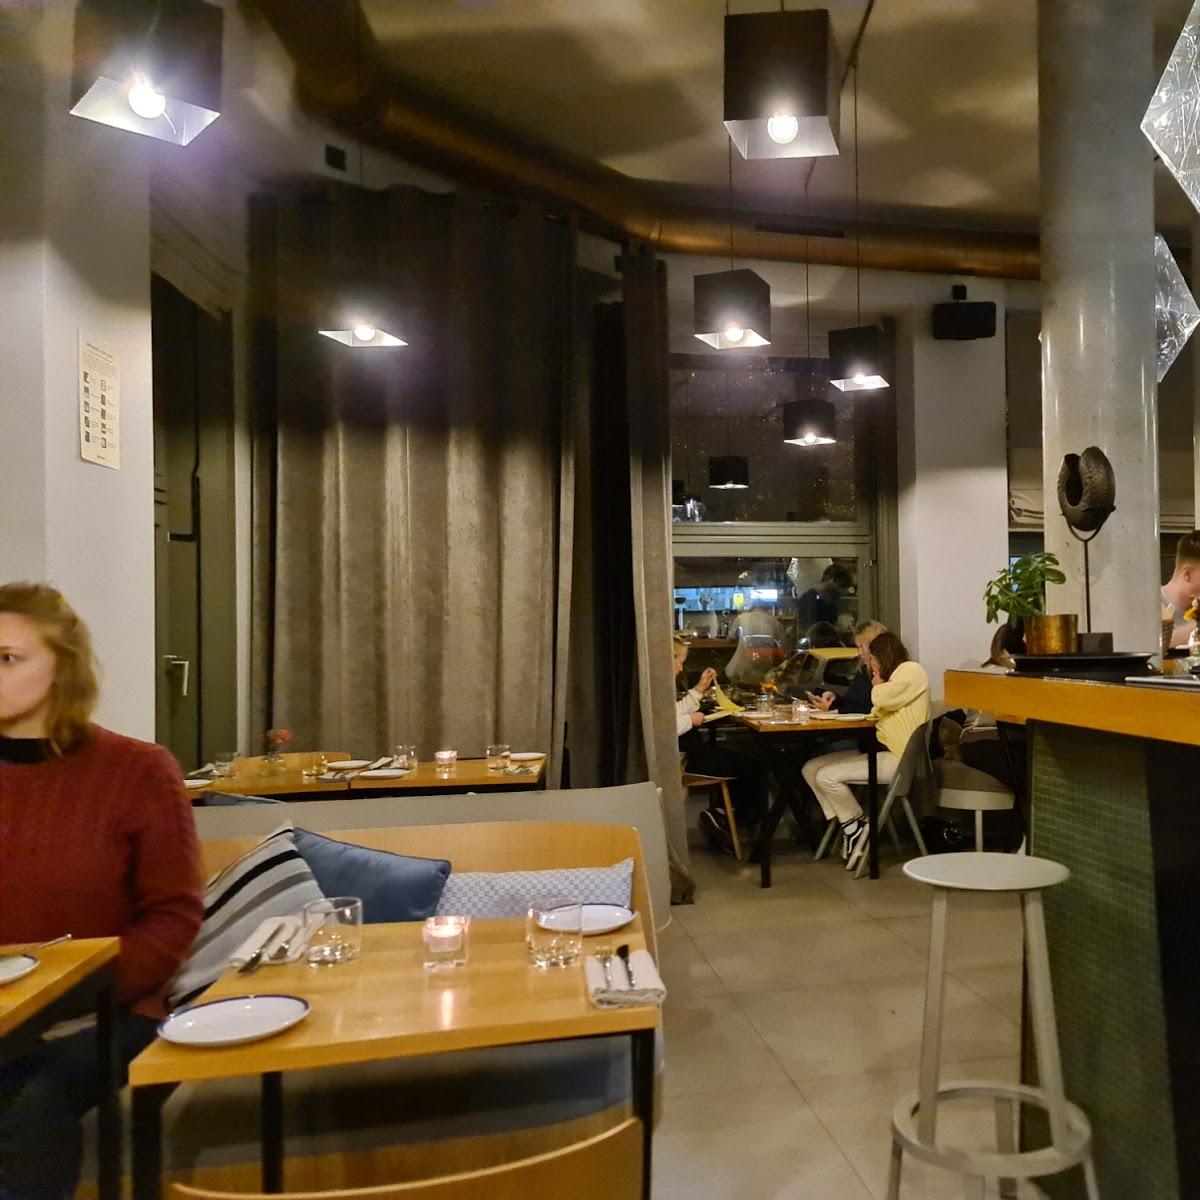 Restaurant "Mezze Bar" in Berlin